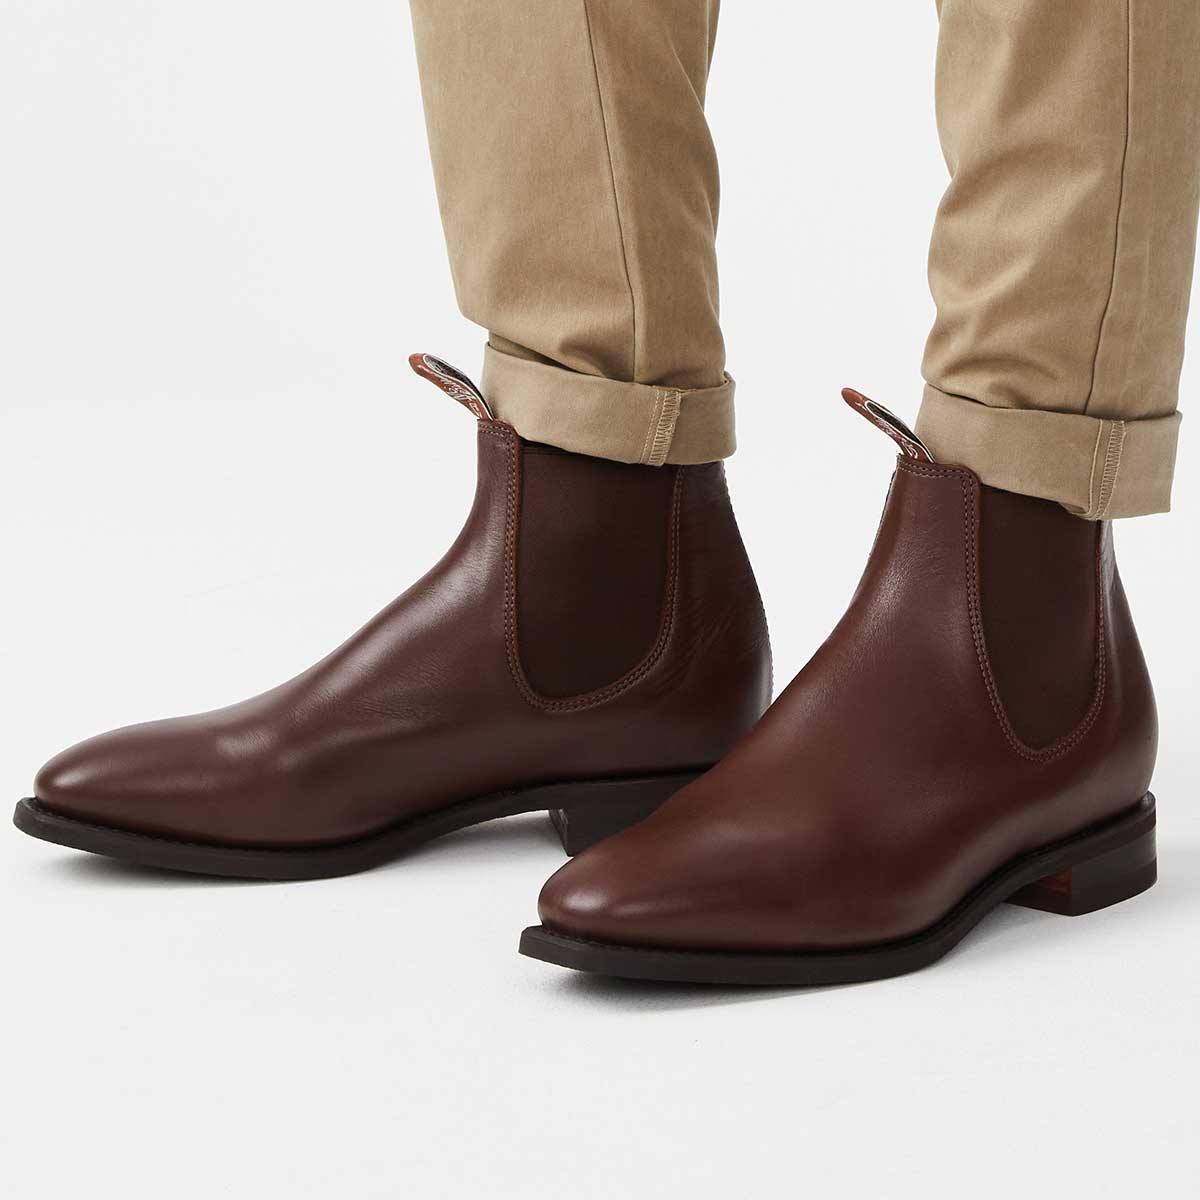 RM Williams – Craftsman Boots - Yearling Dark Tan